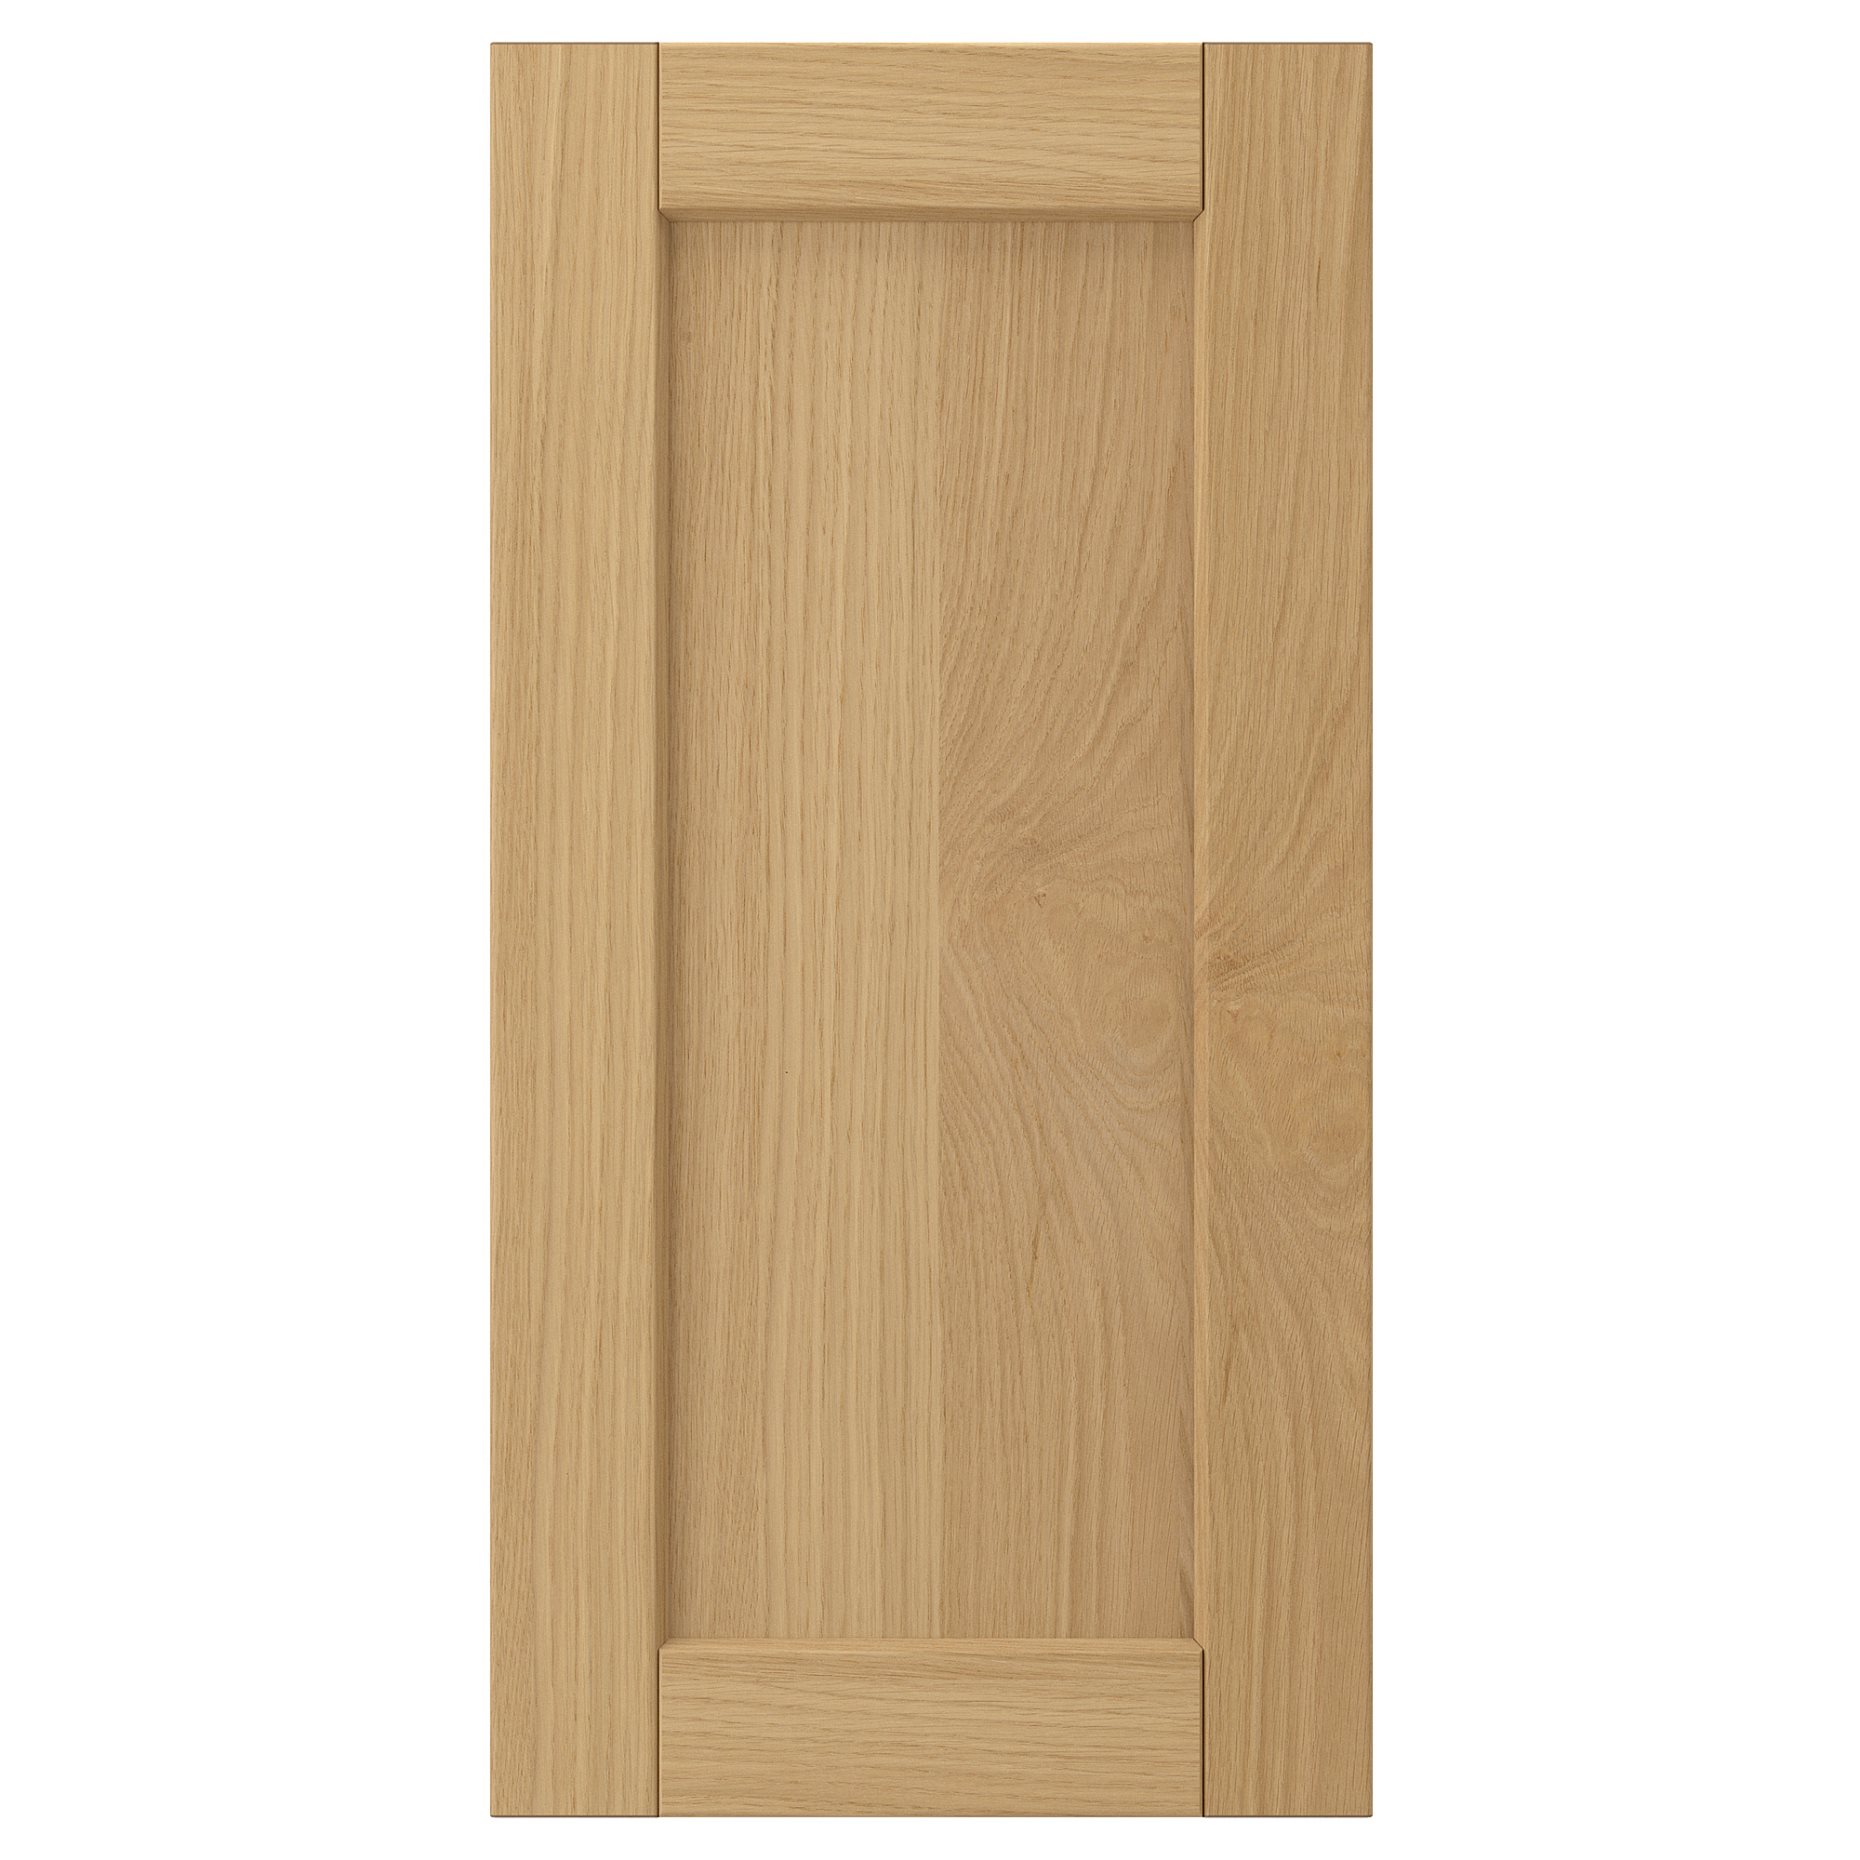 FORSBACKA, πόρτα, 30x60 cm, 605.652.27